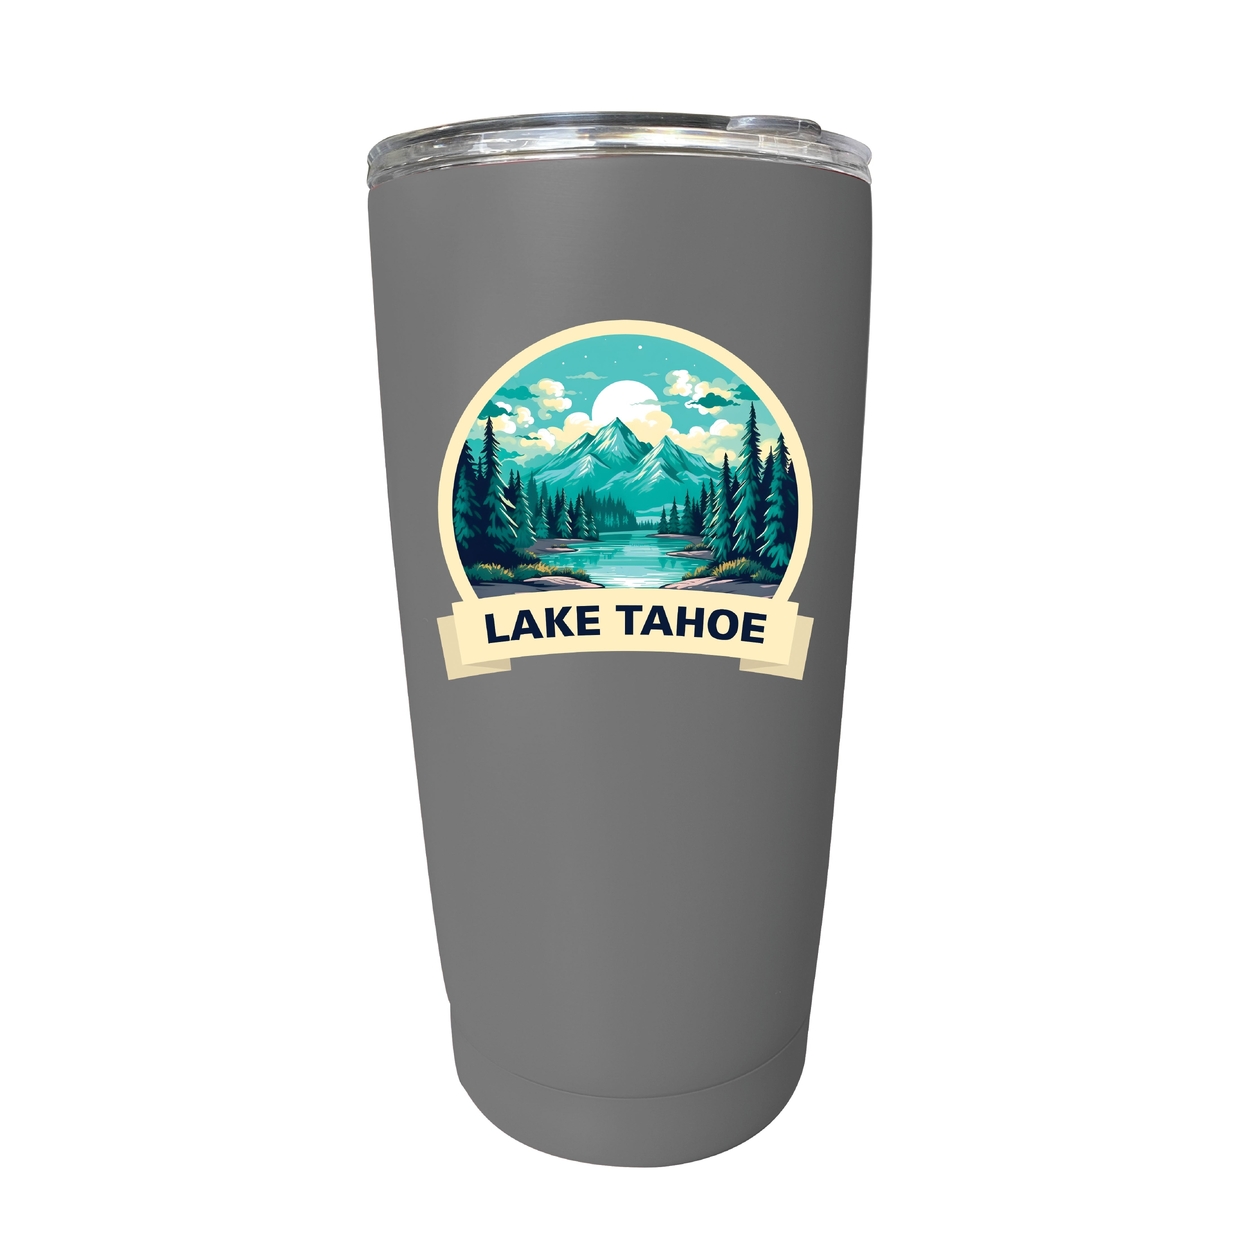 Lake Tahoe California Souvenir 16 Oz Stainless Steel Insulated Tumbler - Gray,,Single